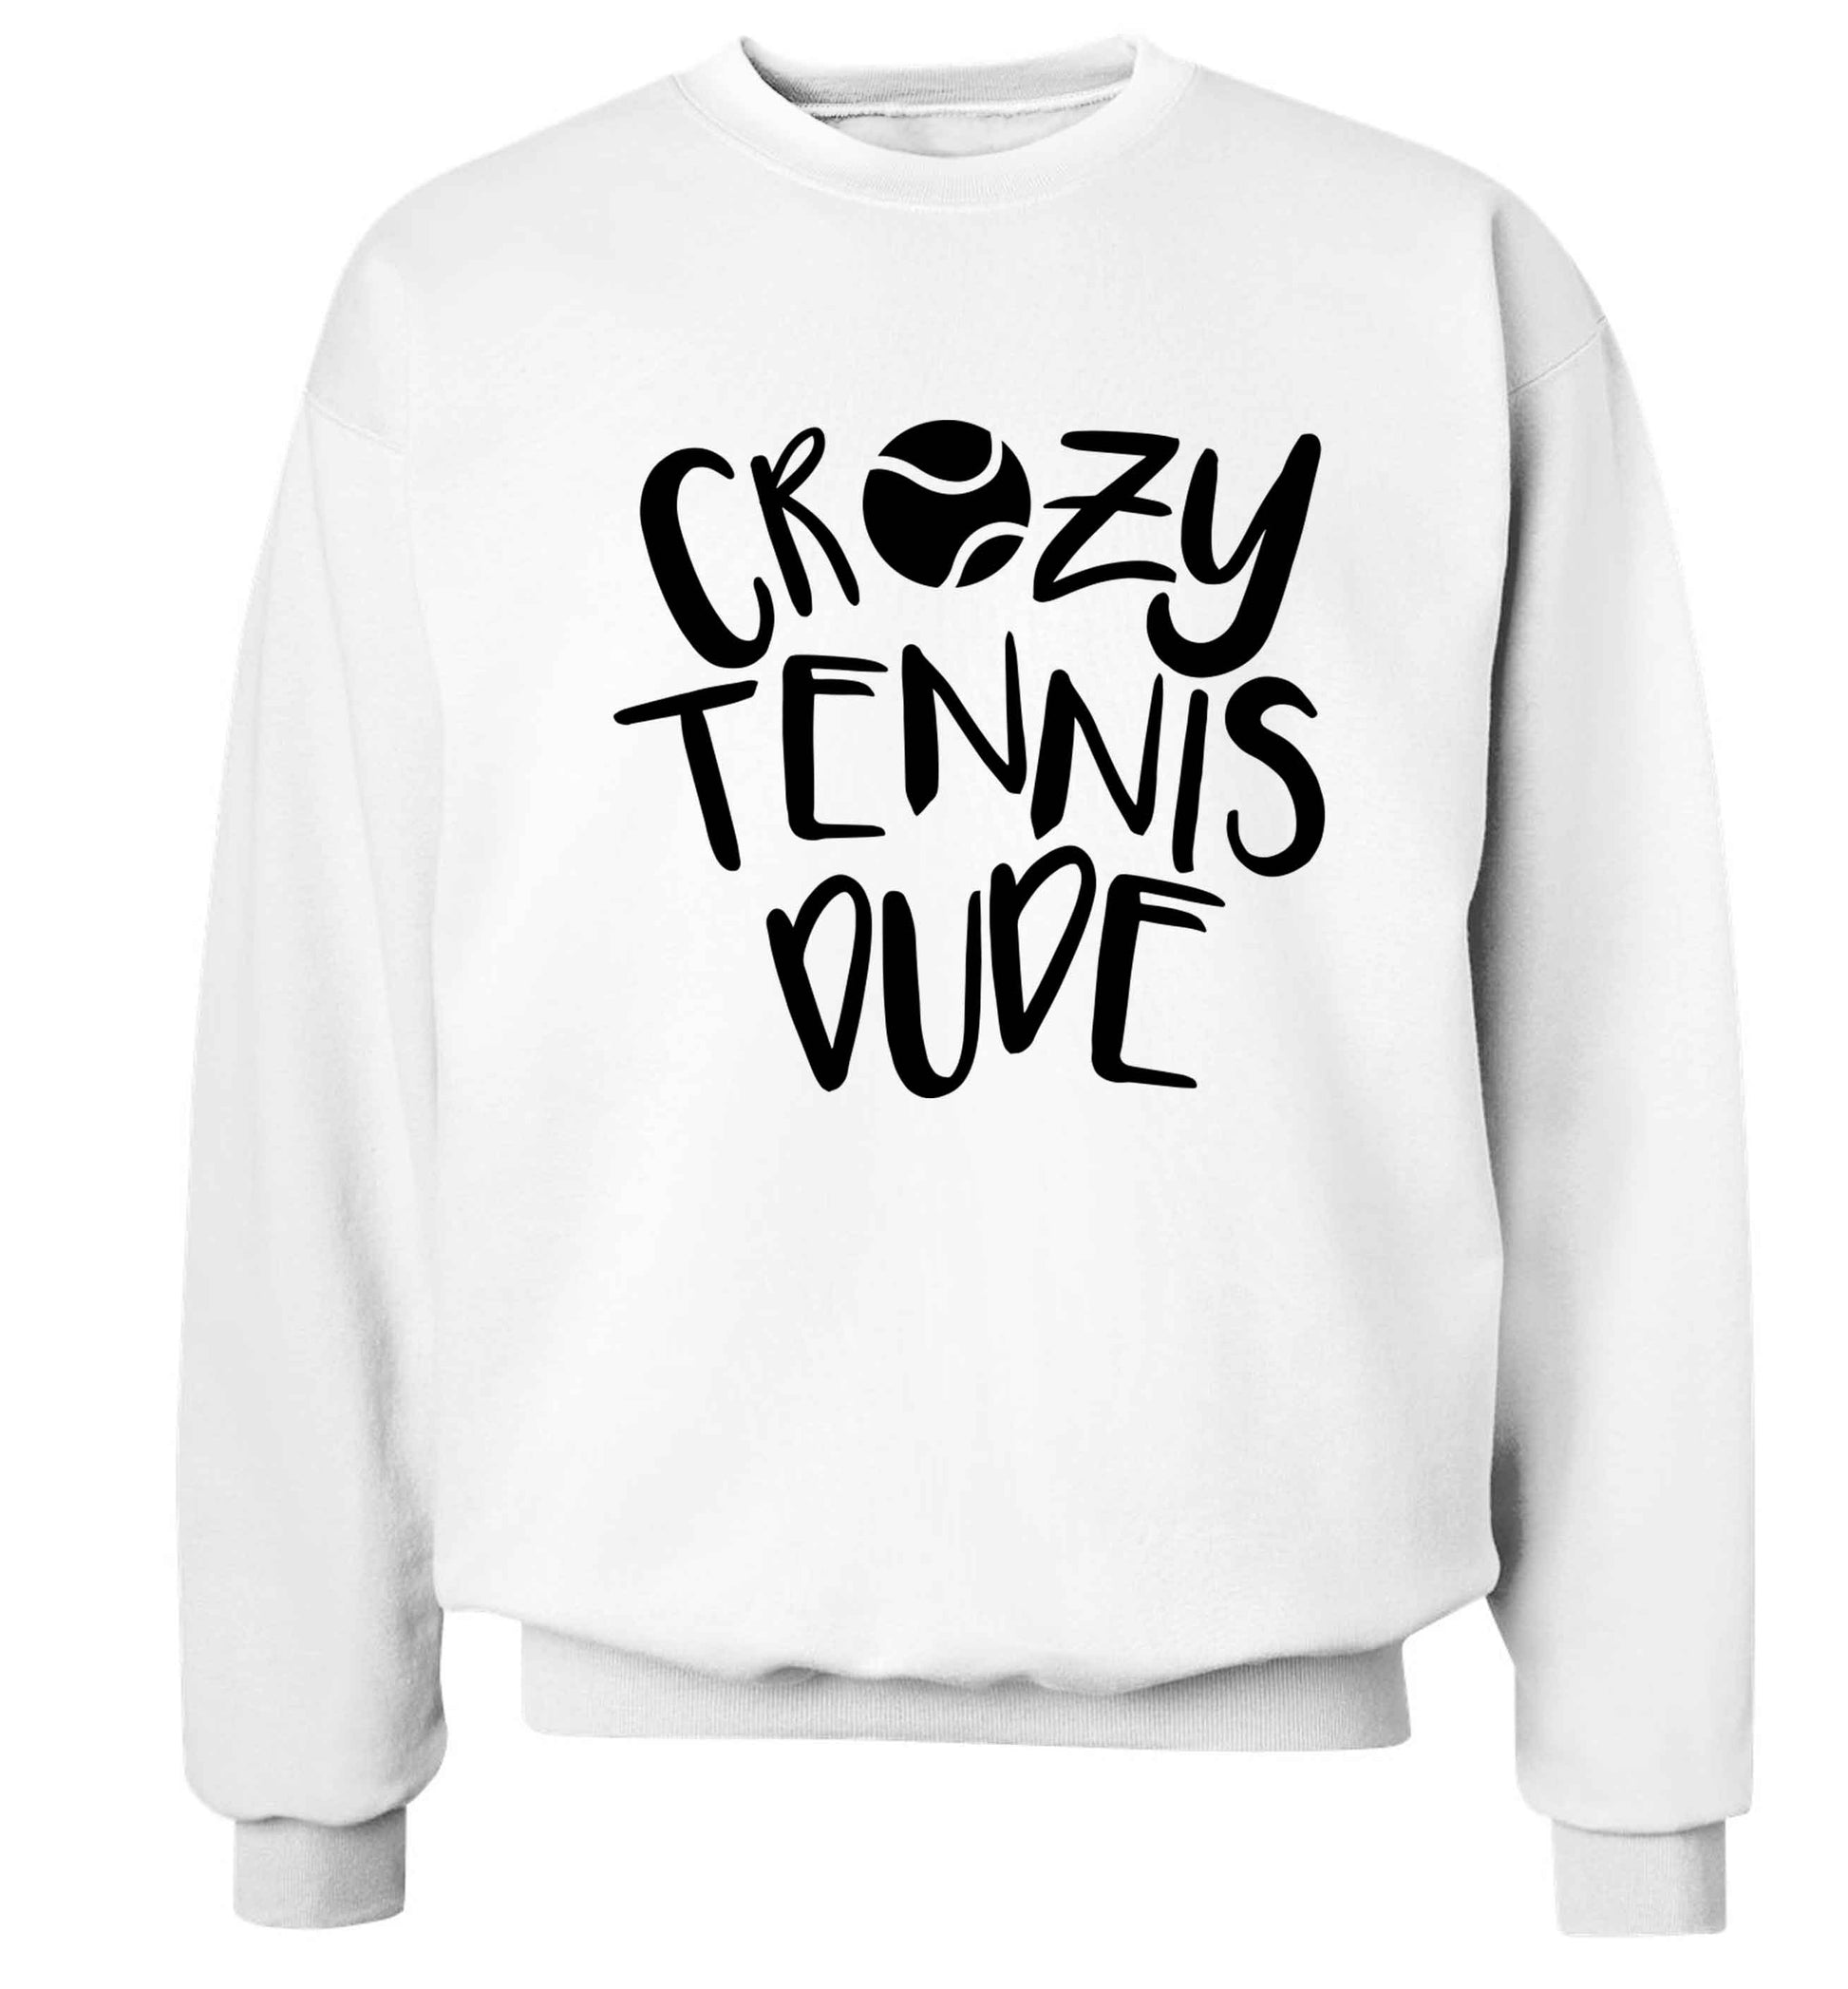 Crazy tennis dude Adult's unisex white Sweater 2XL